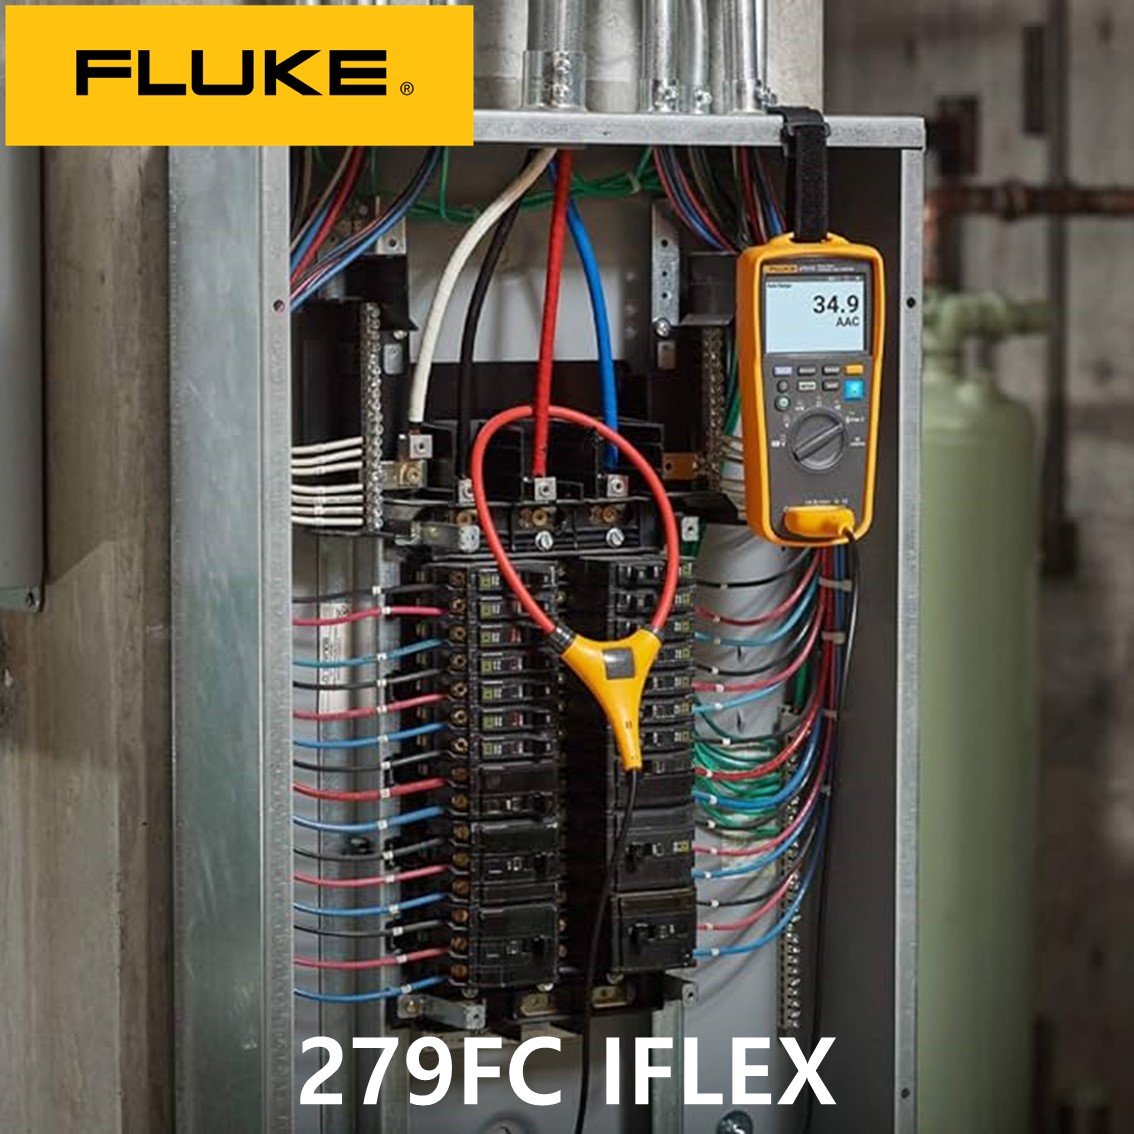 [ Fluke 279 FC IFLEX ] 정품 플루크 열화상카메라+멀티미터, 플루크 279FC